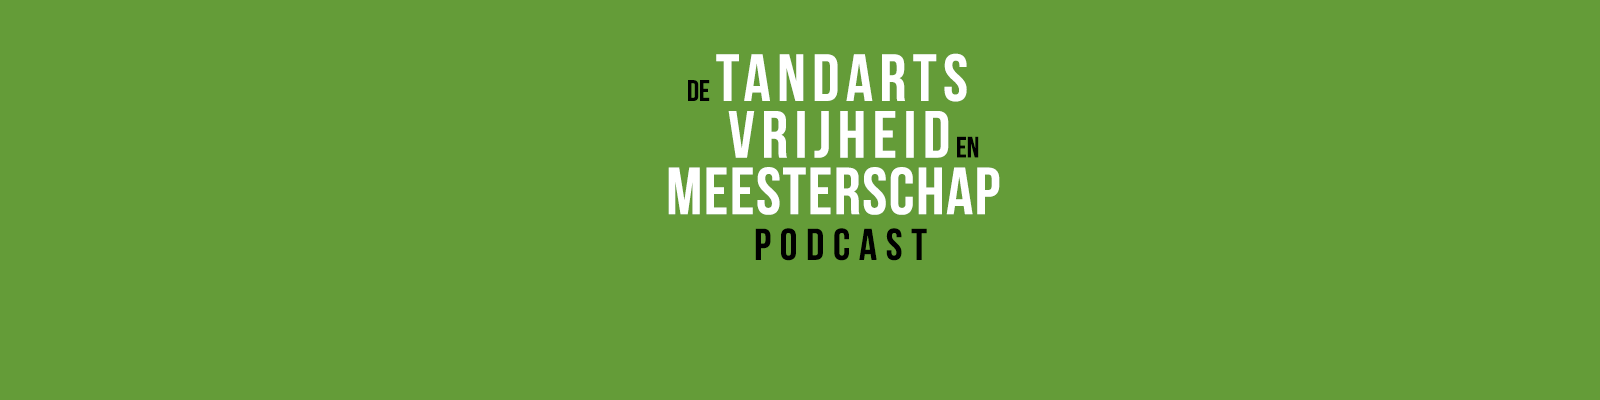 Tandarts Podcast